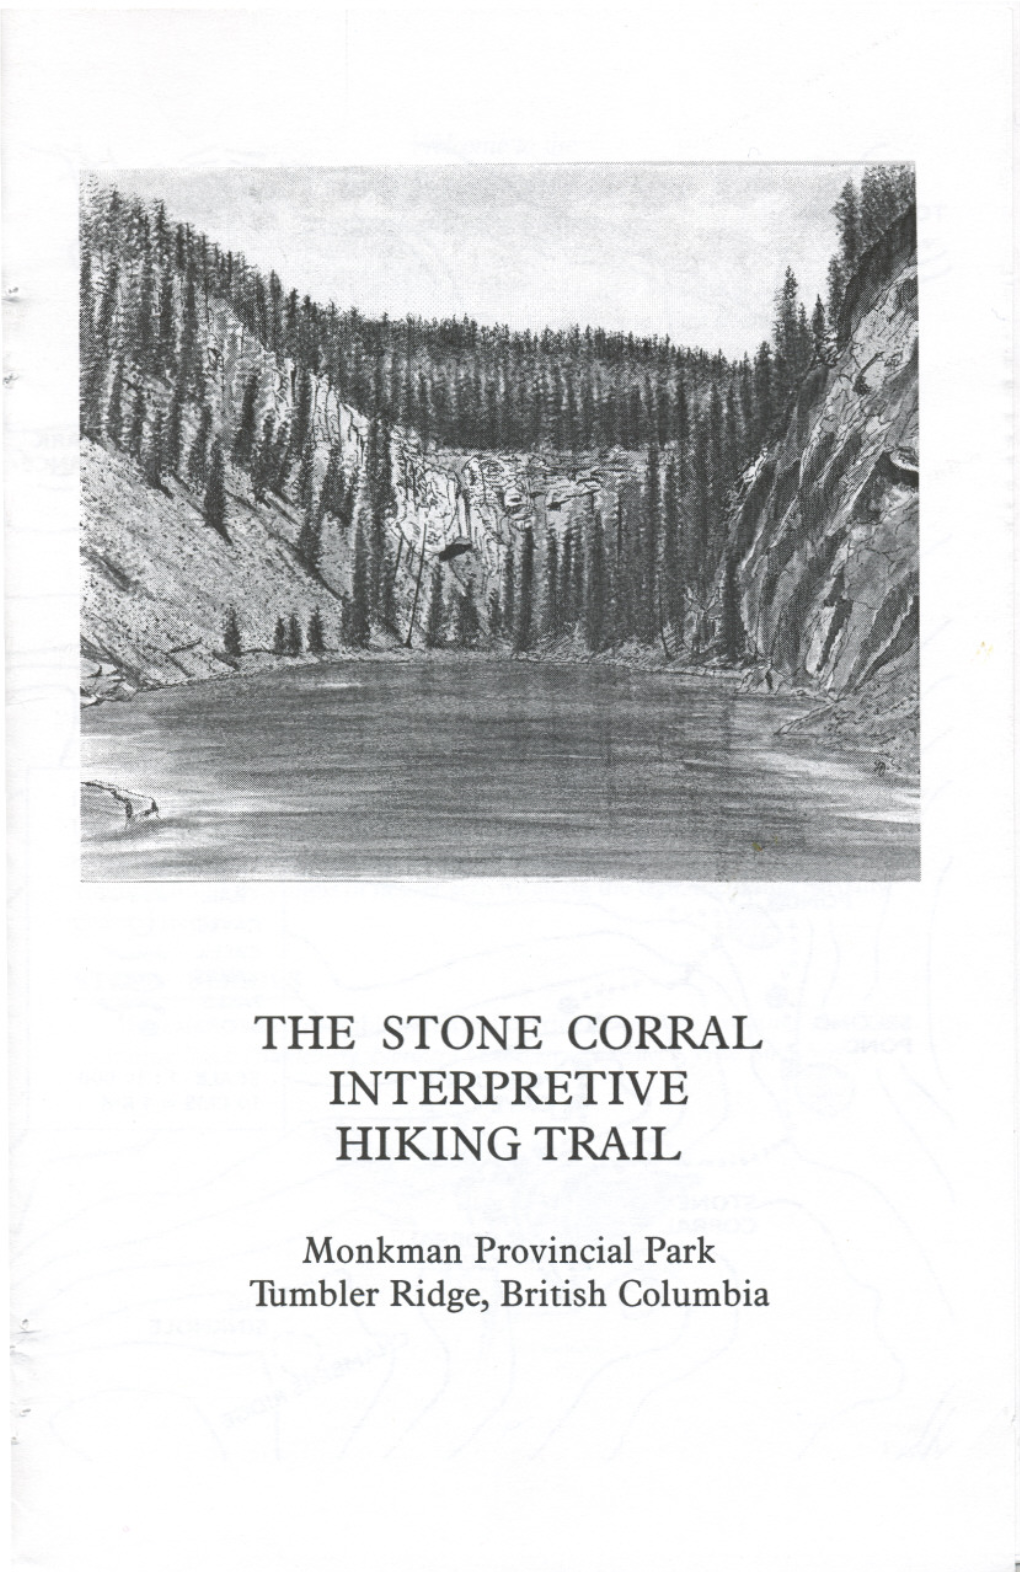 The Stone Corral Interpretive Hiking Trail